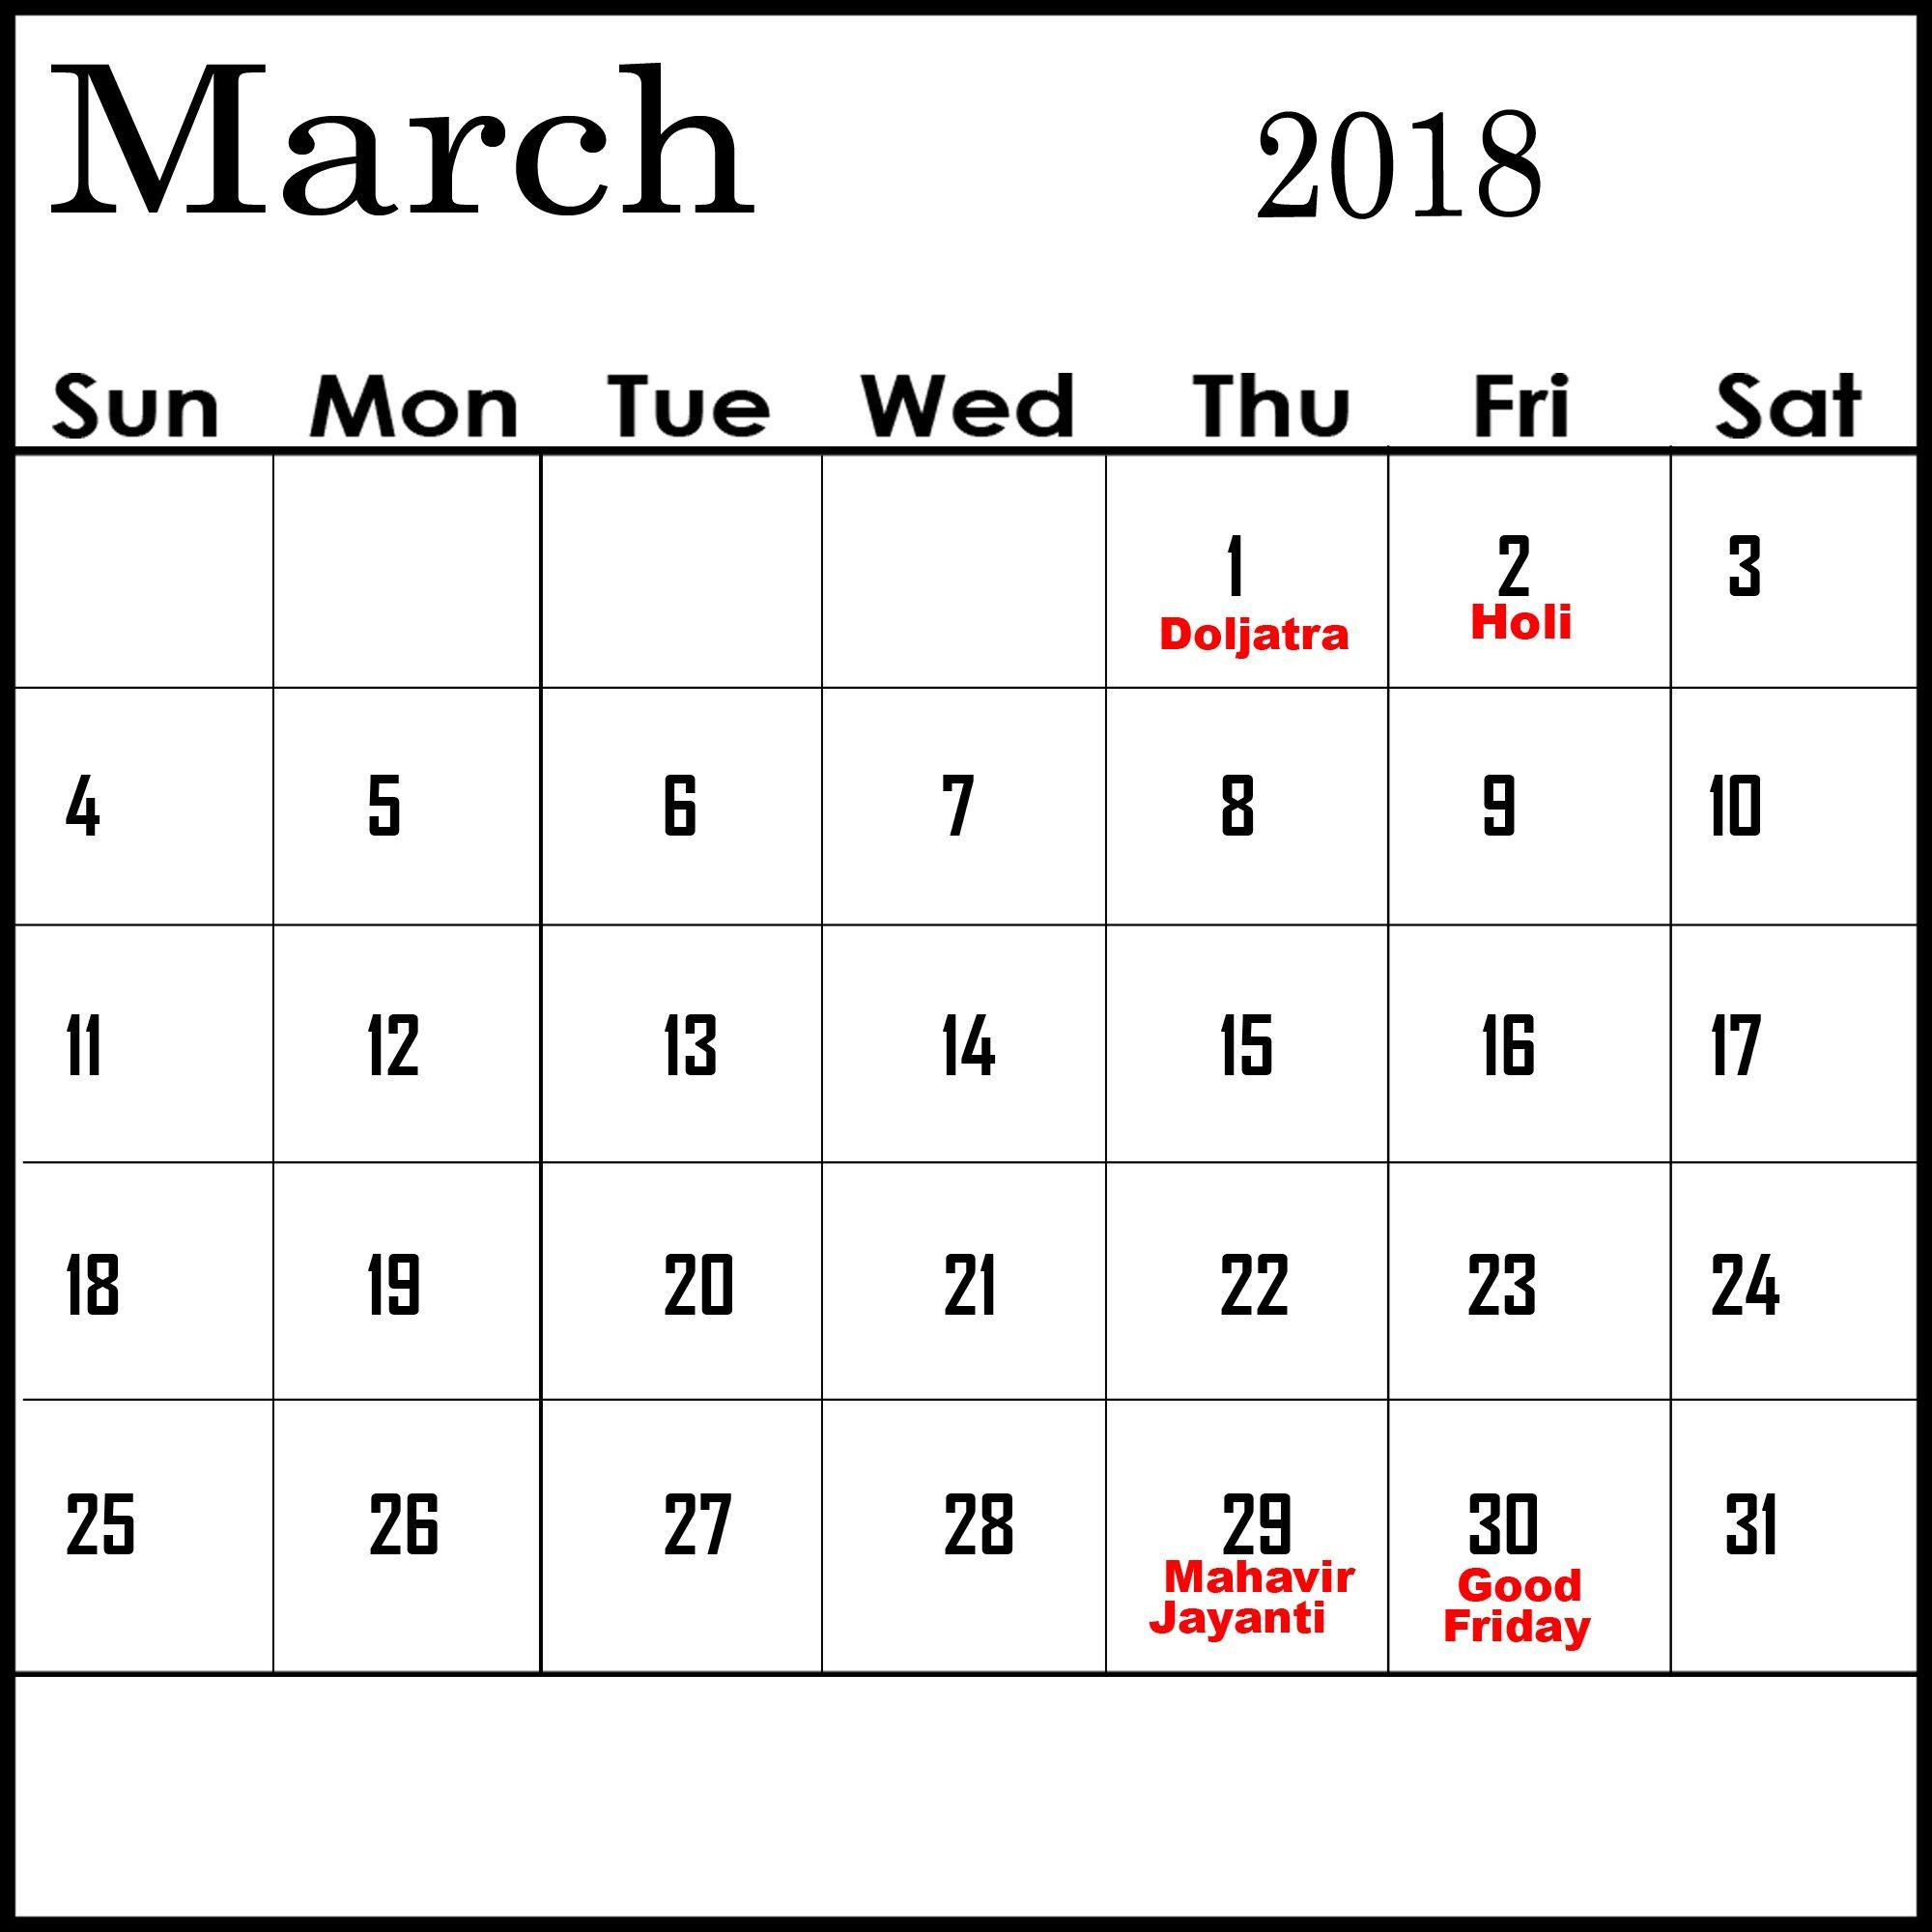 March 2018 Calendar Wallpapers Wallpaper Cave